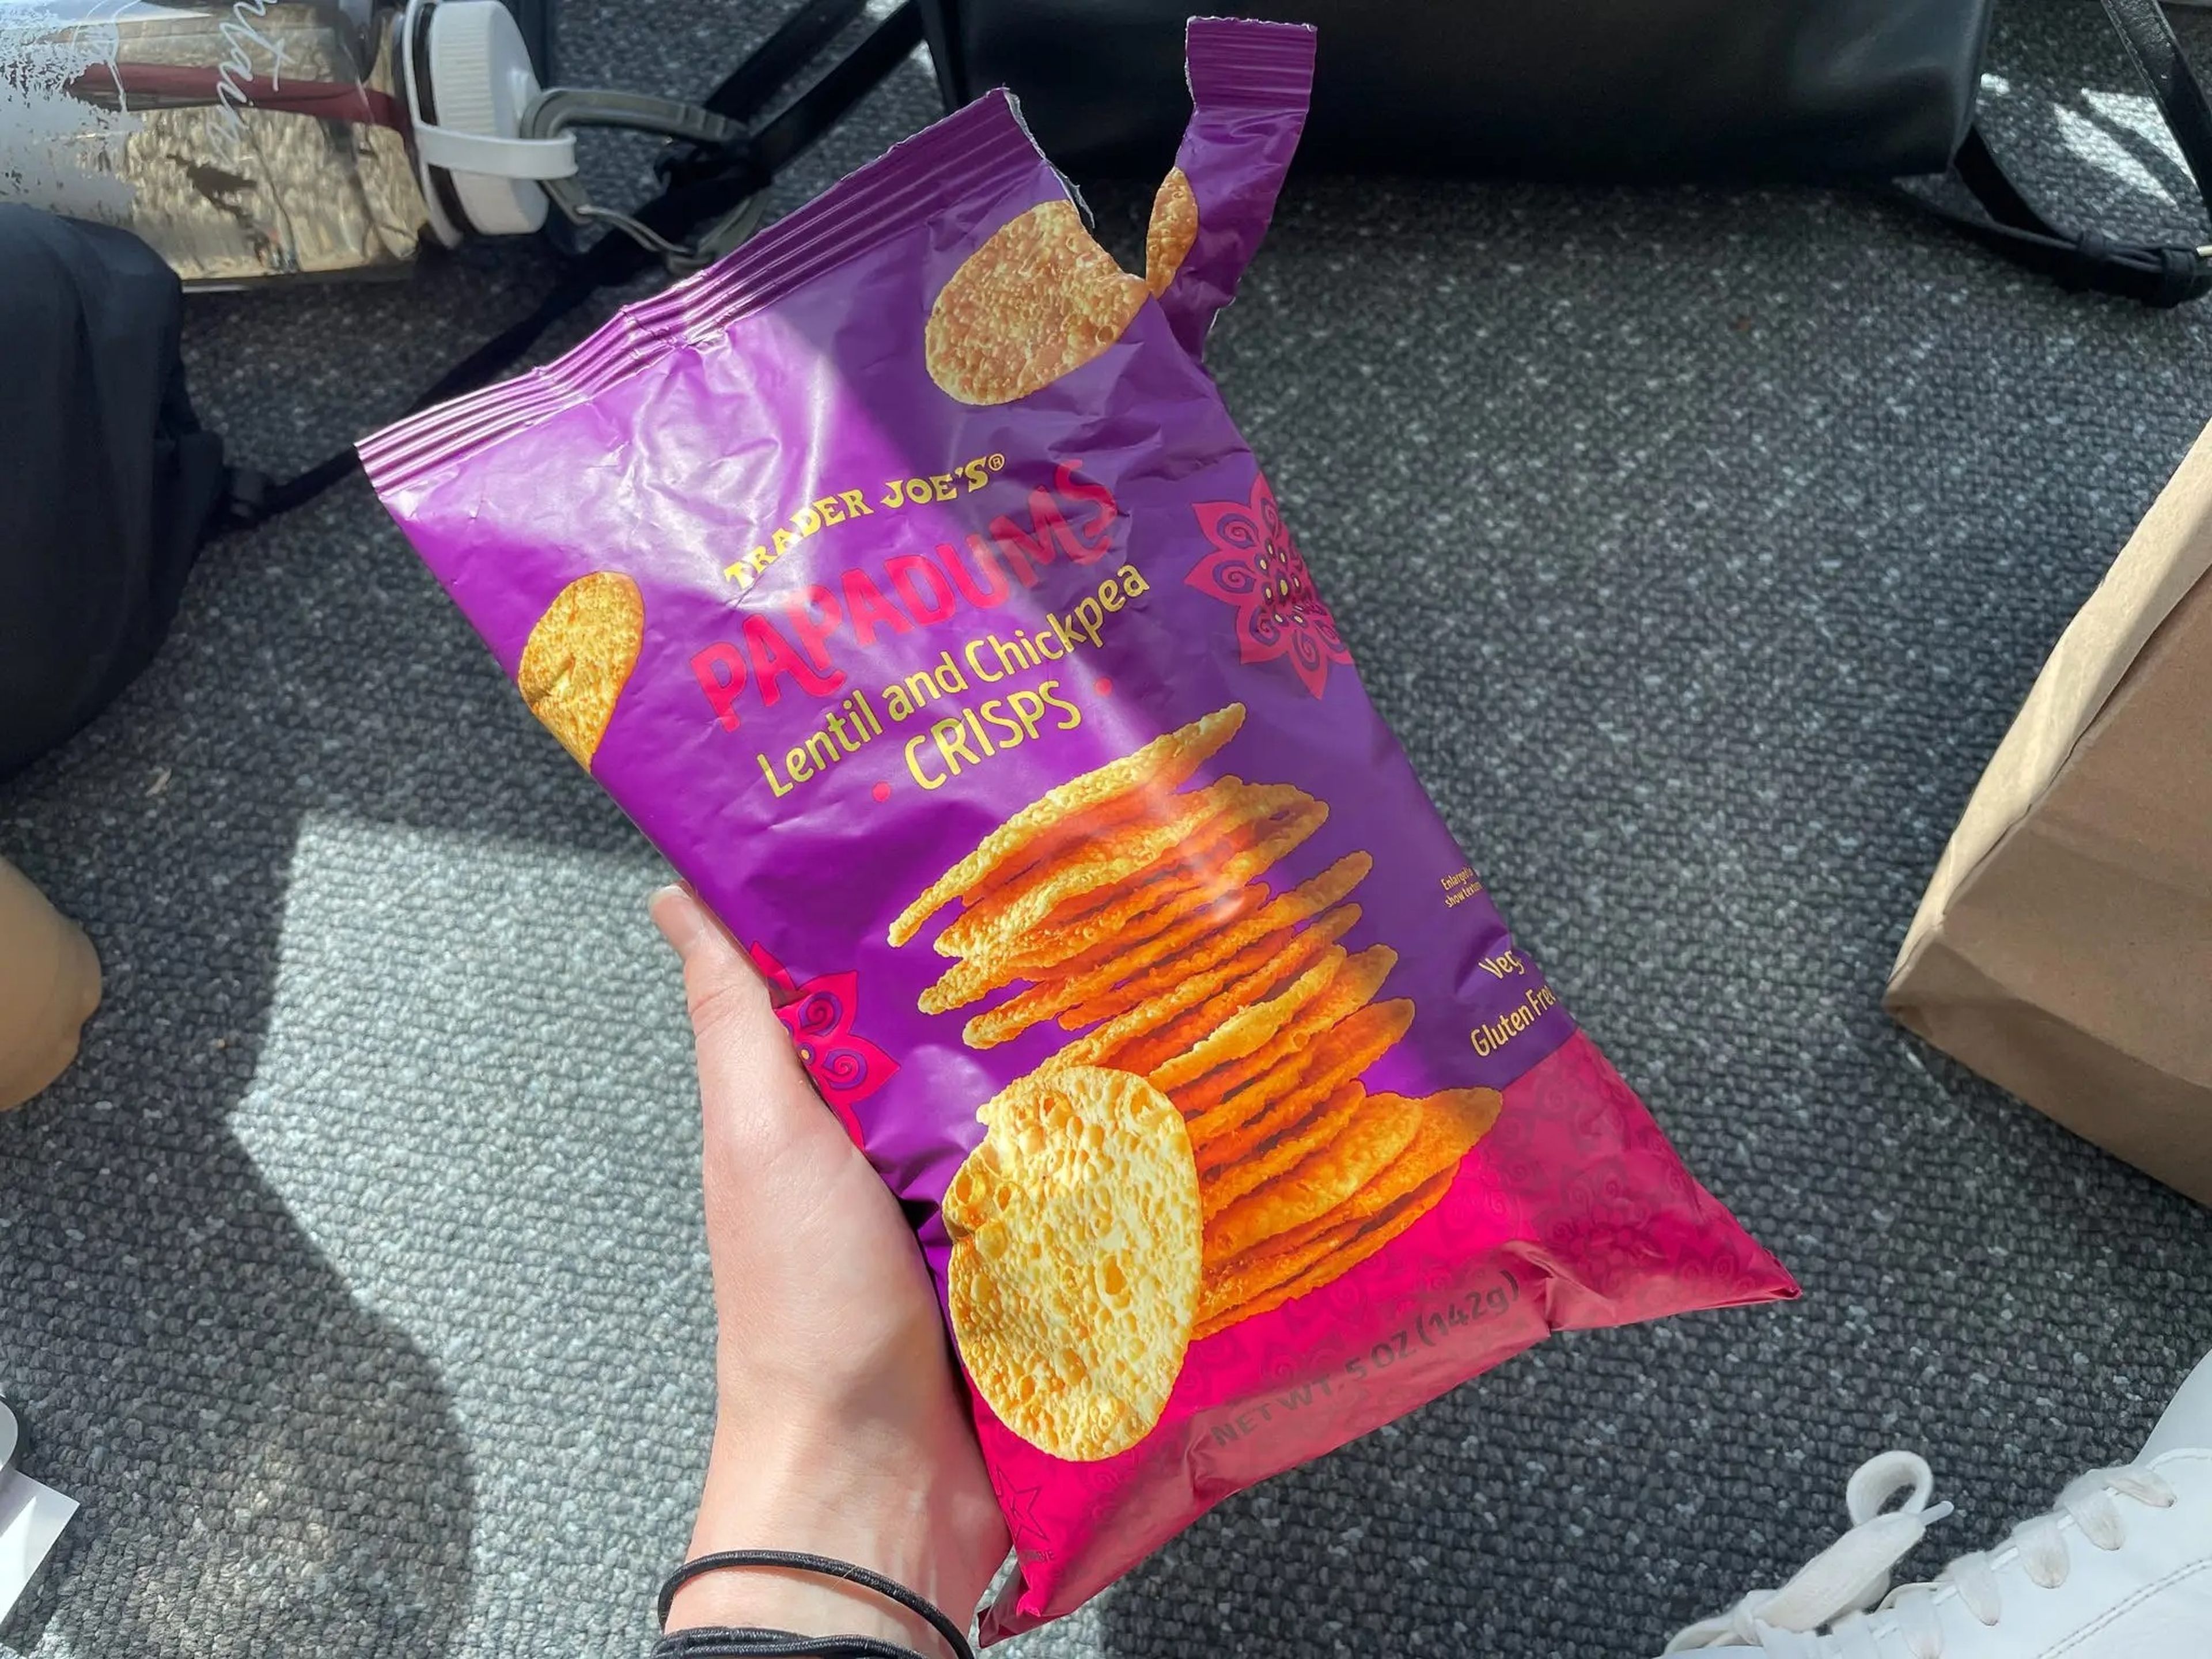 Insider's author packed her own snacks for her economy flight.